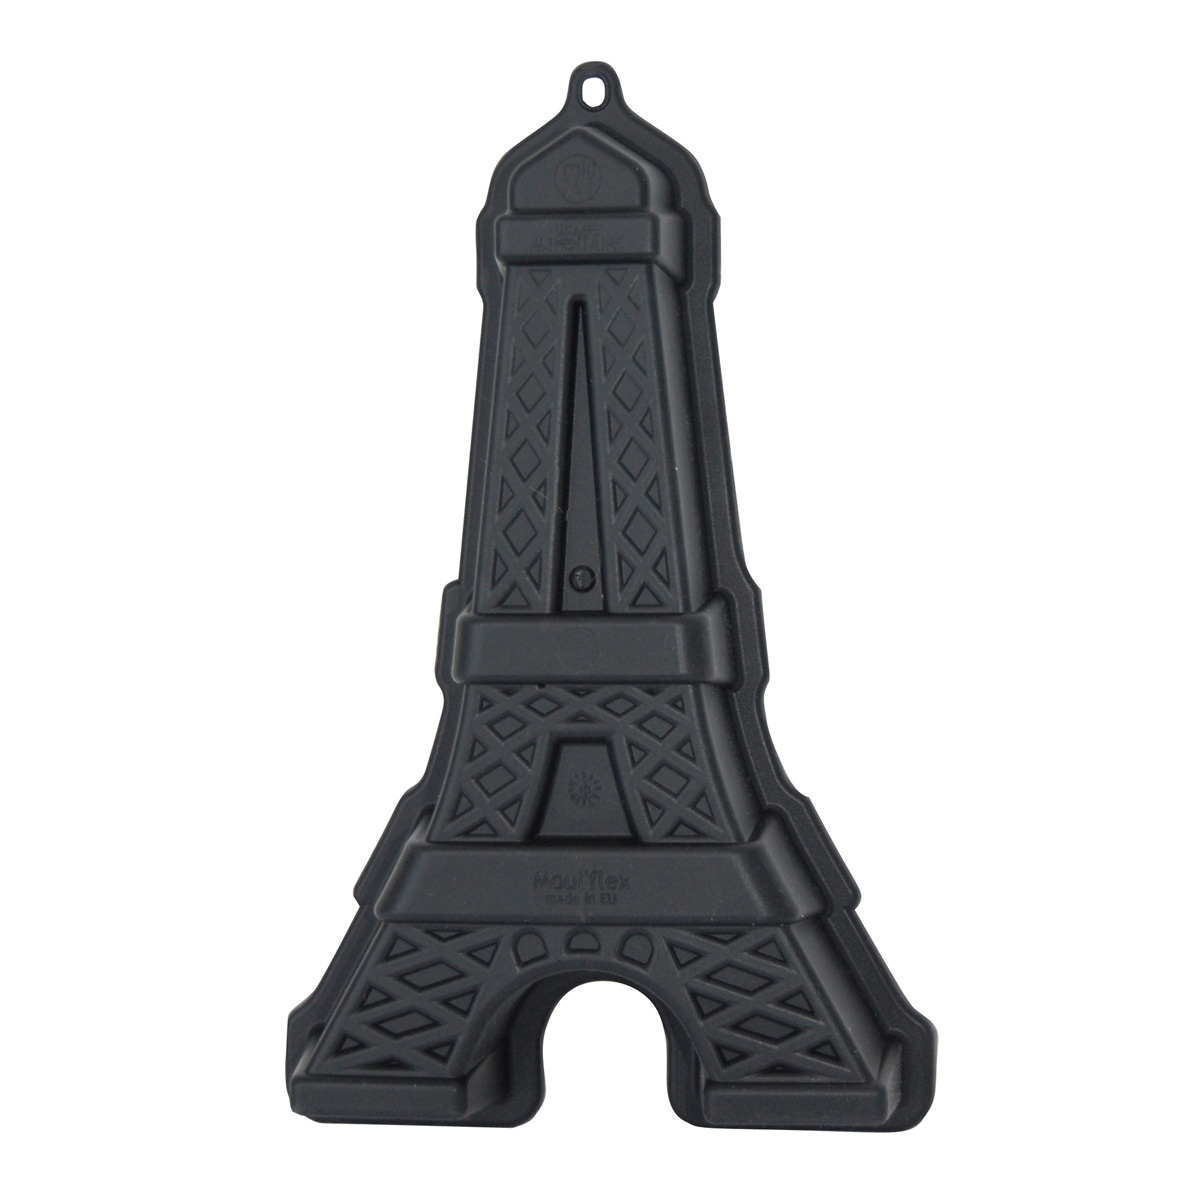 de Buyer Moulflex Silikon Eiffel Turm Form - mit Antihaft-Eigenschaften